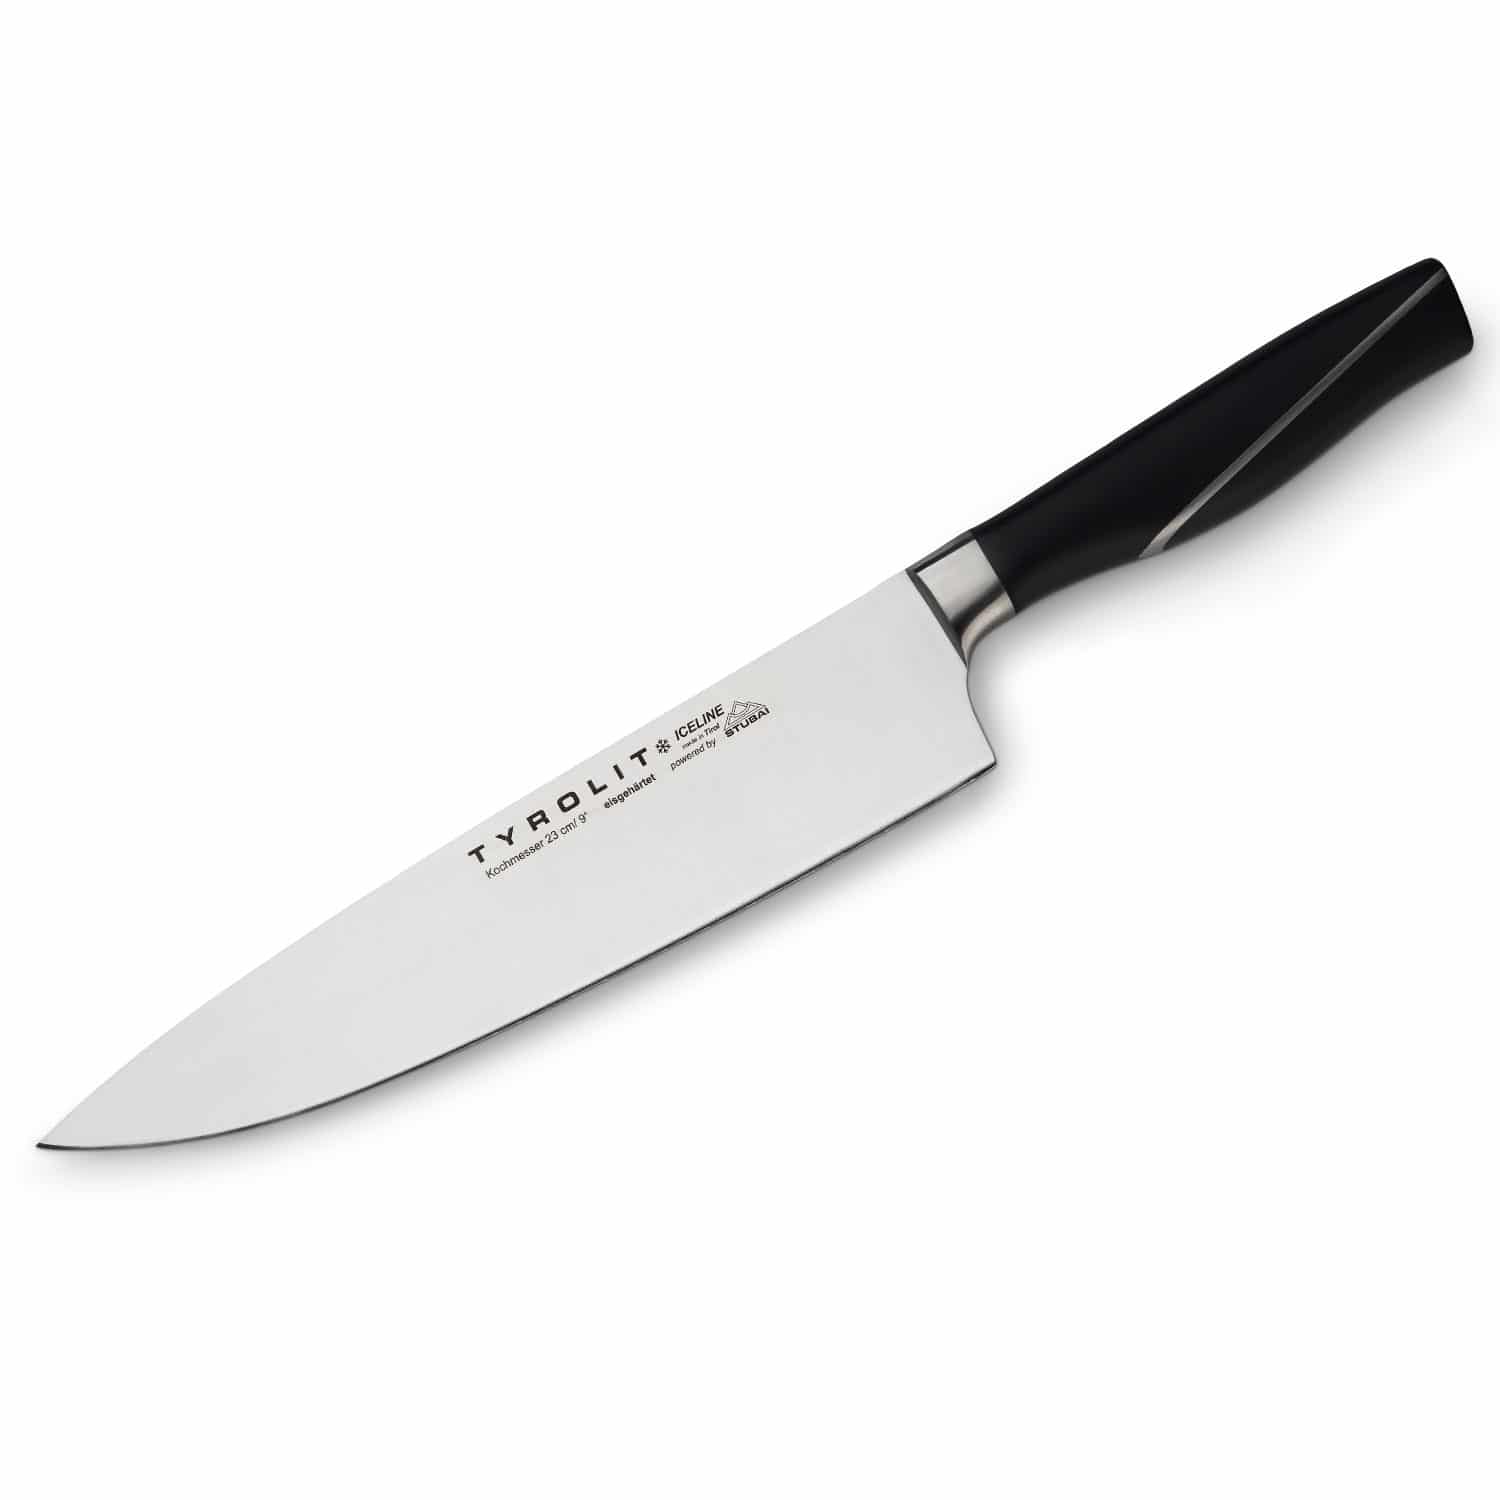 TYROLIT life kitchen knife 23cm